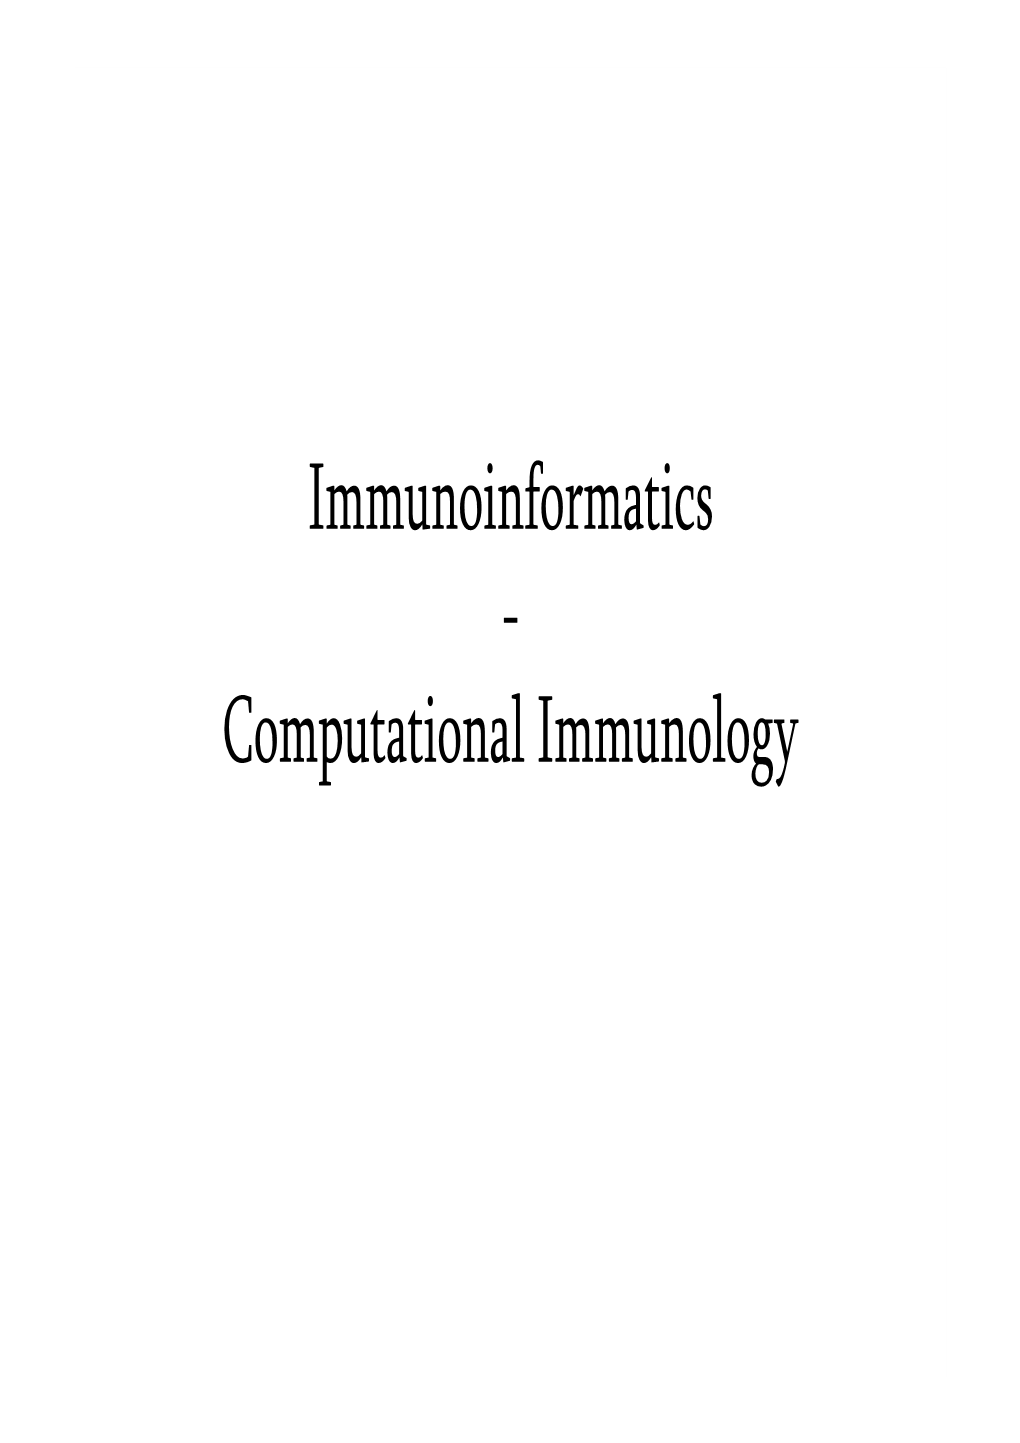 Immunoinformatics - Computational Immunology Table of Contents